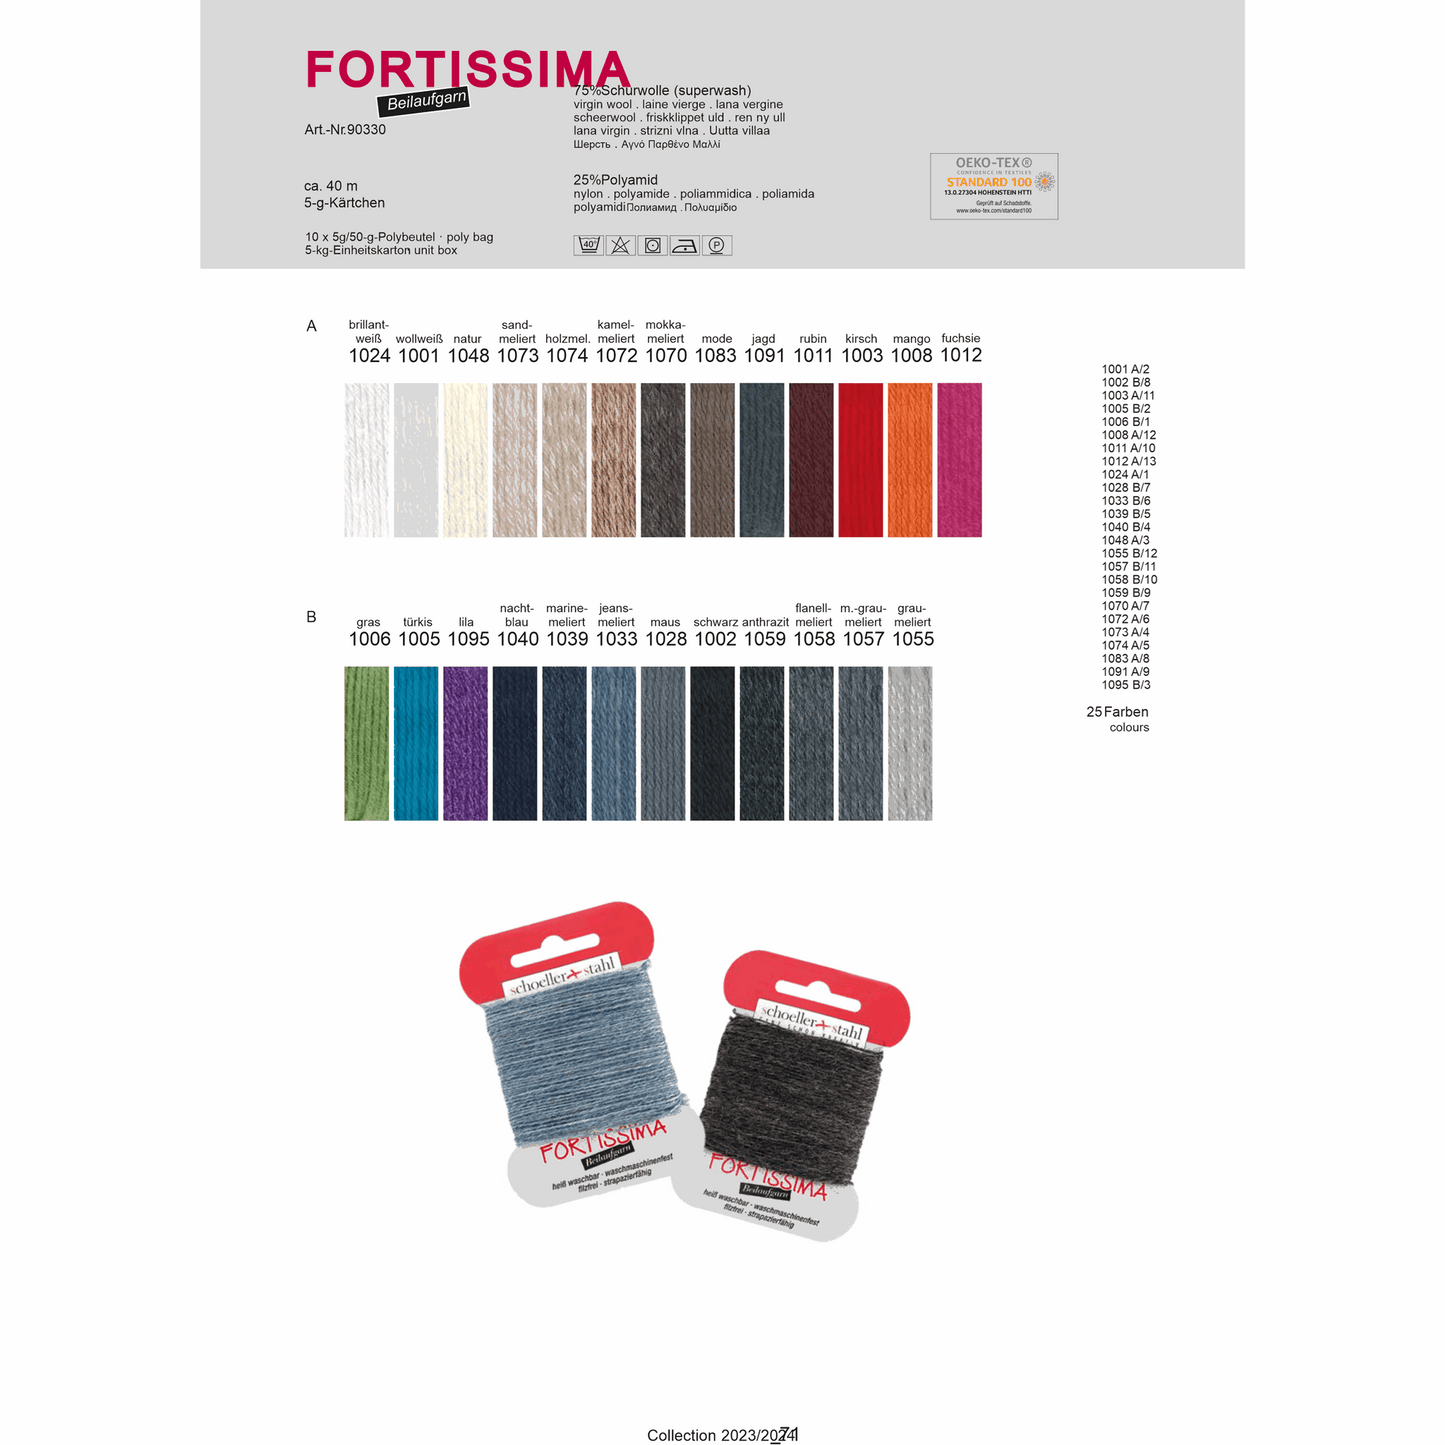 Fortissima Beilaufgarn 5g, 90330, Farbe 1095, lila